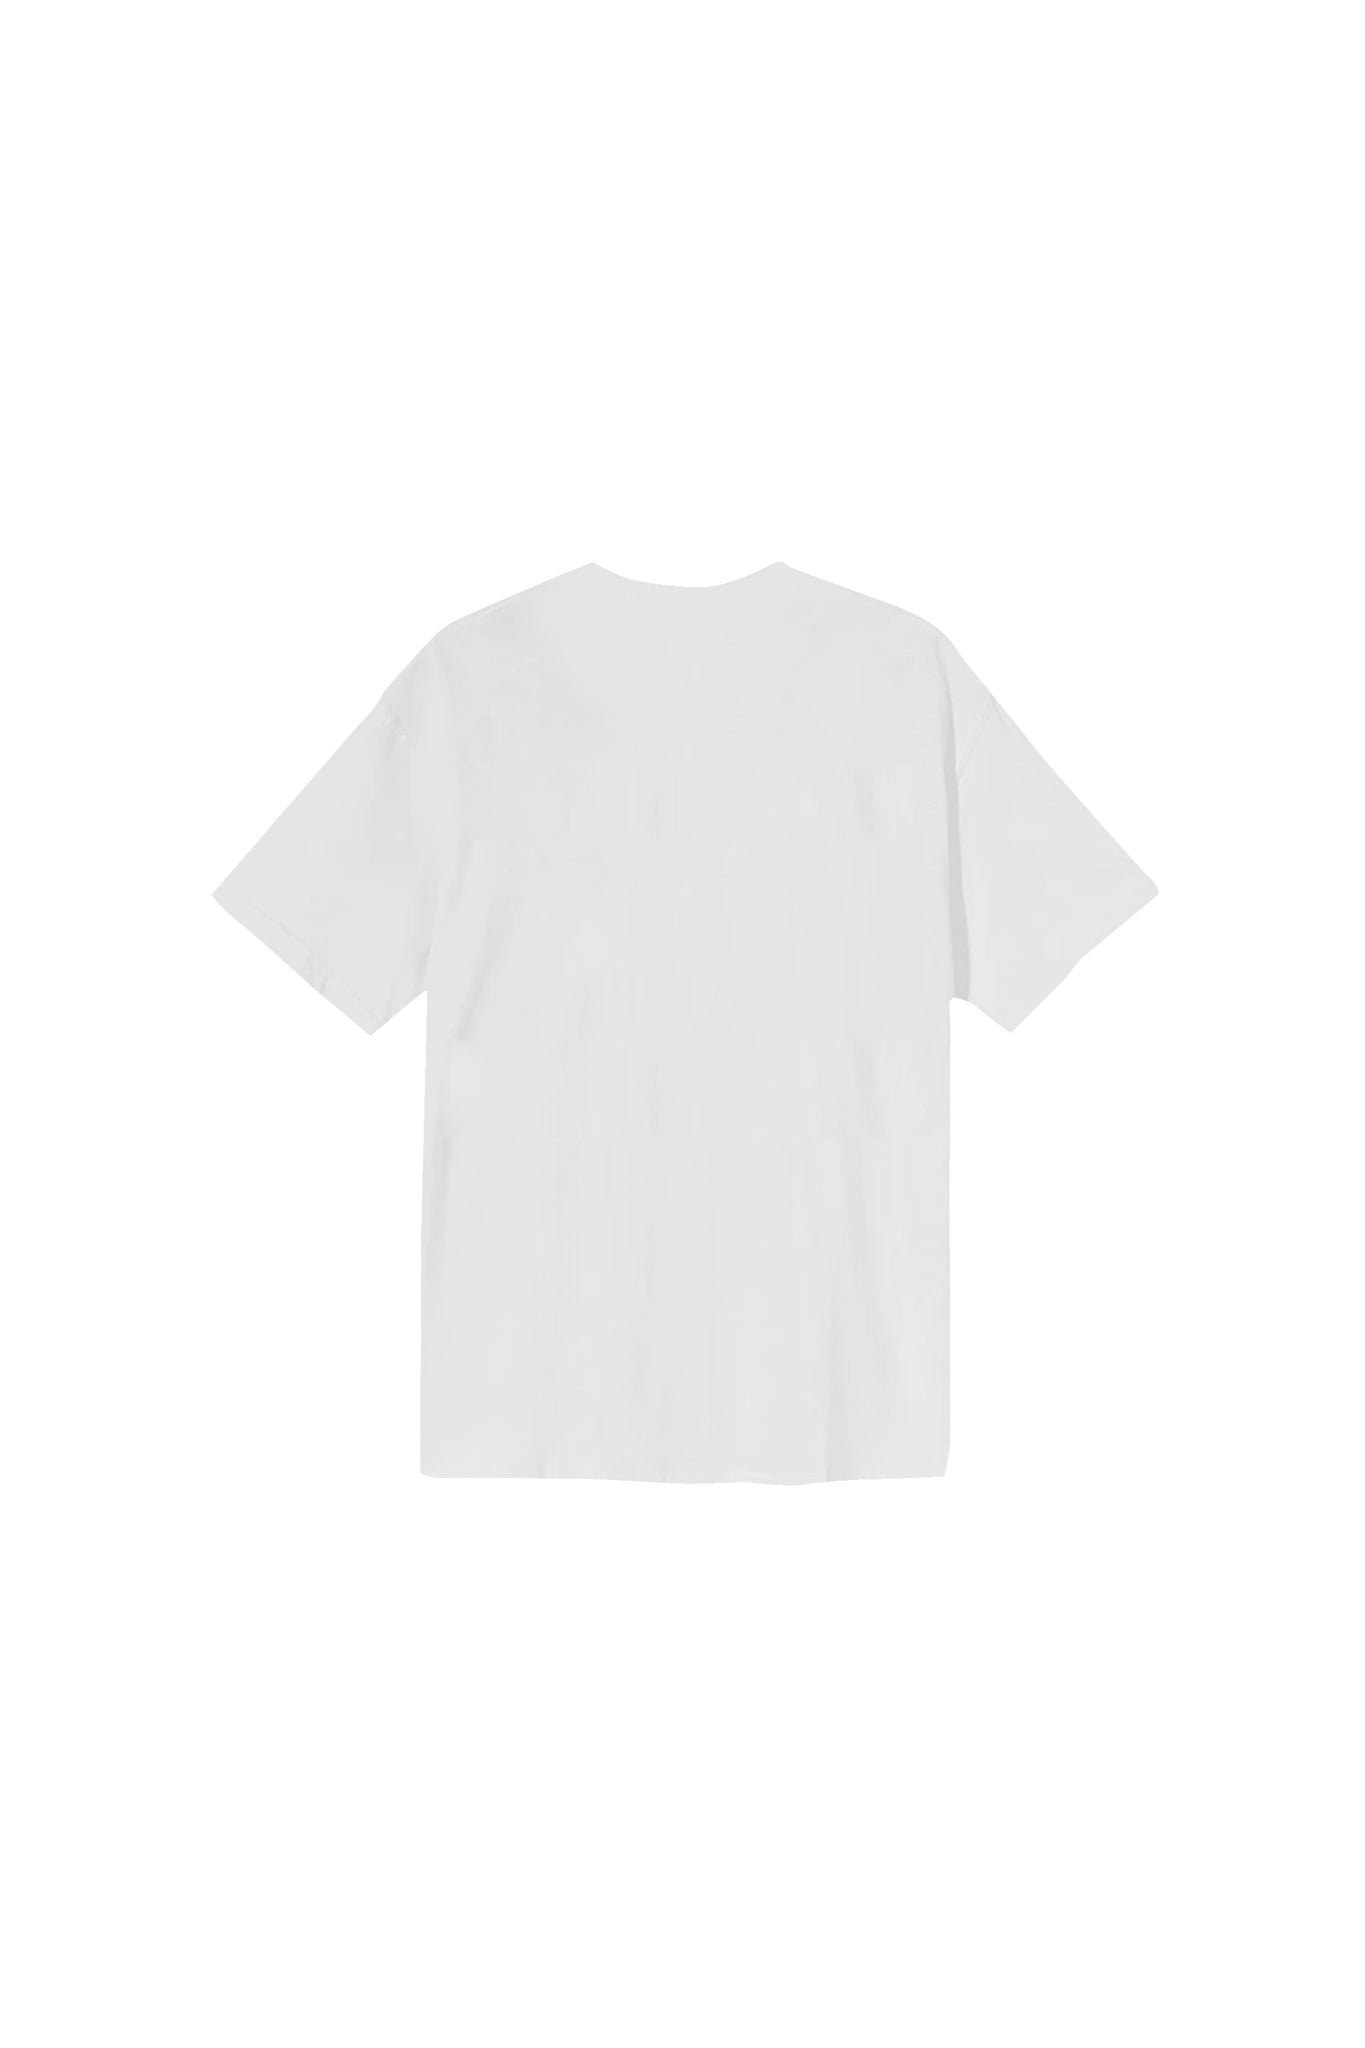 "FOMO" T-Shirt Since2017 White 